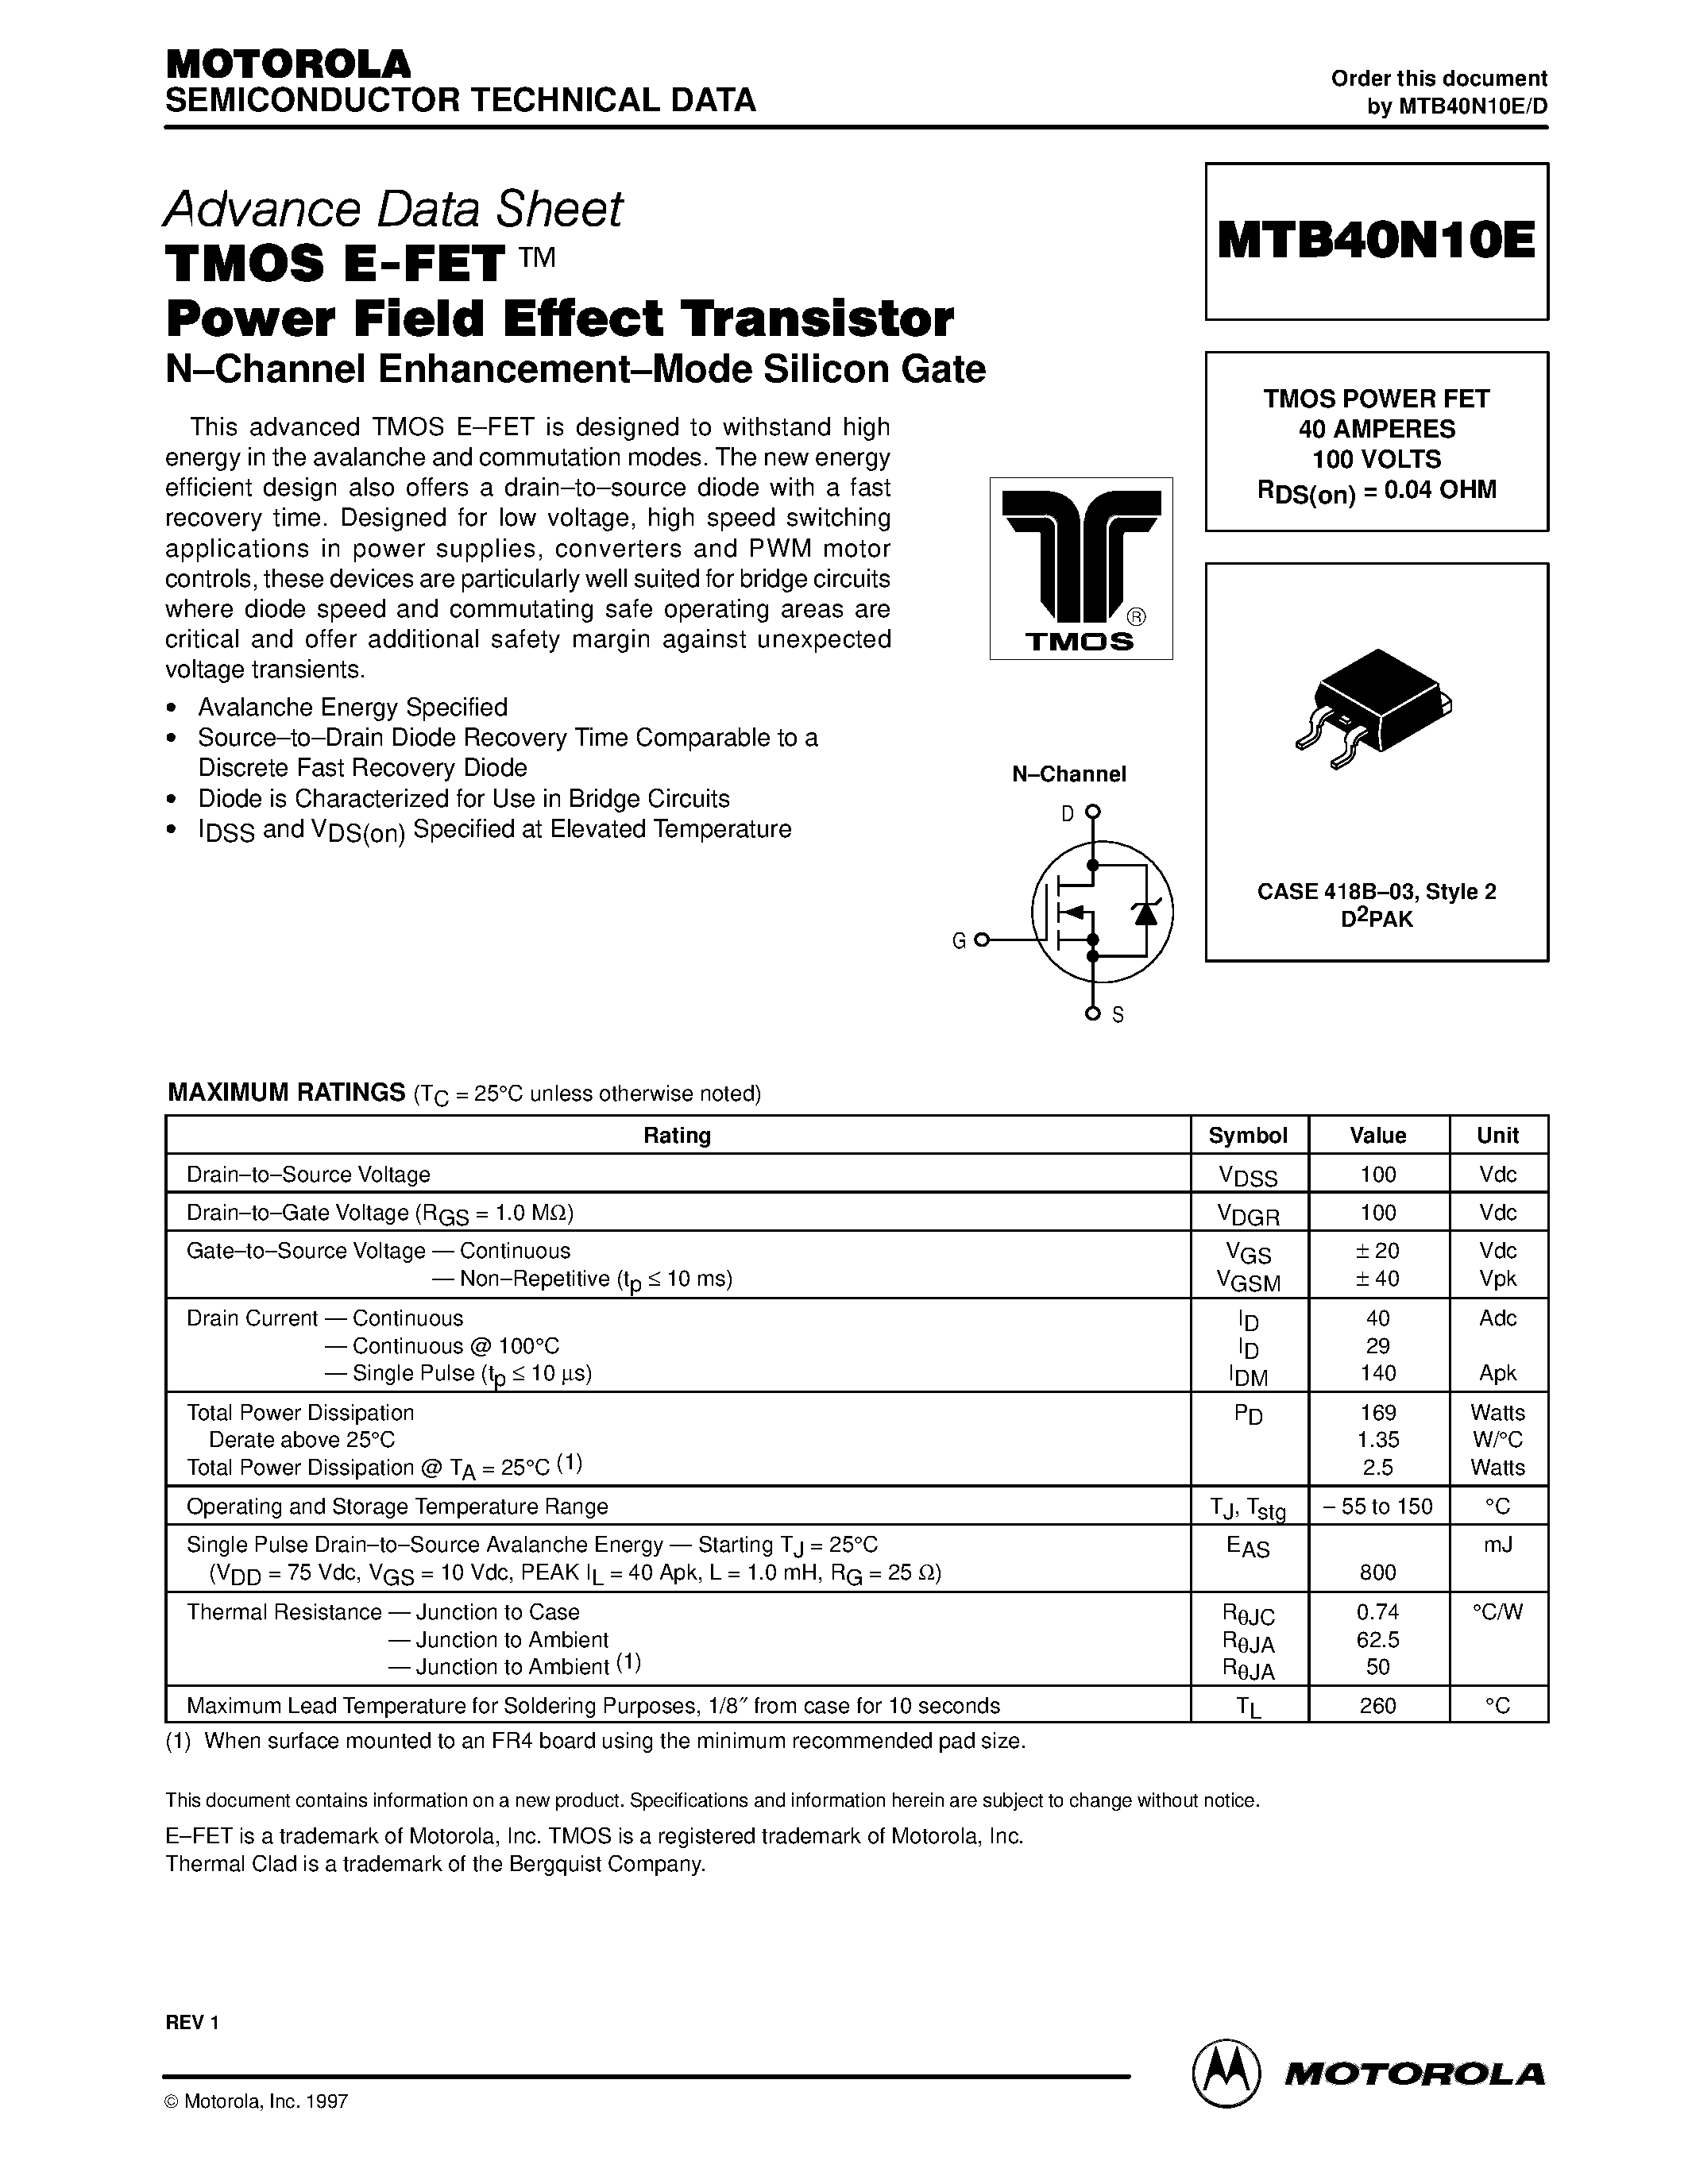 Datasheet MTB40N10E - TMOS POWER FET 40 AMPERES 100 VOLTS page 1